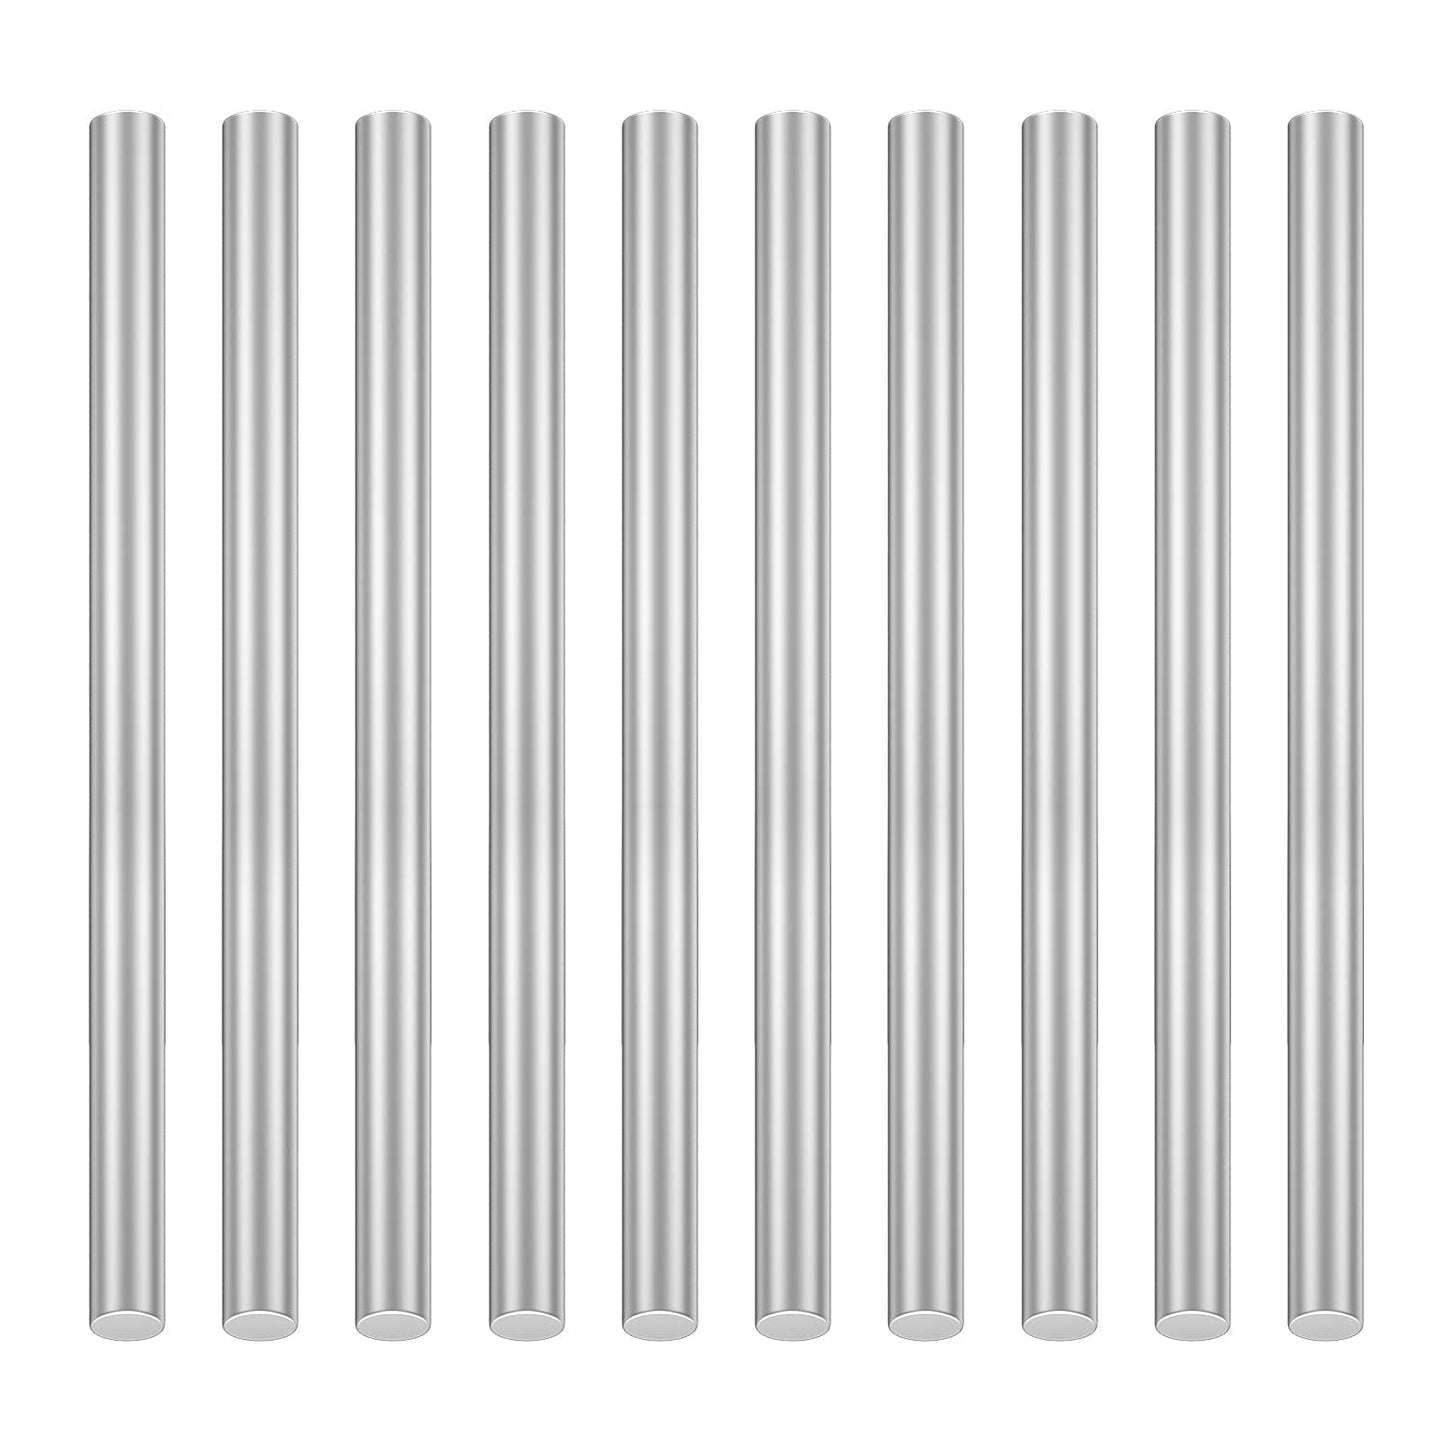 Aluminum round Rods Assortment Kit, Lathe Bar Stock, Diameter 1.0-8.0Mm, Length 100Mm for DIY Craft Making (27 Pieces)